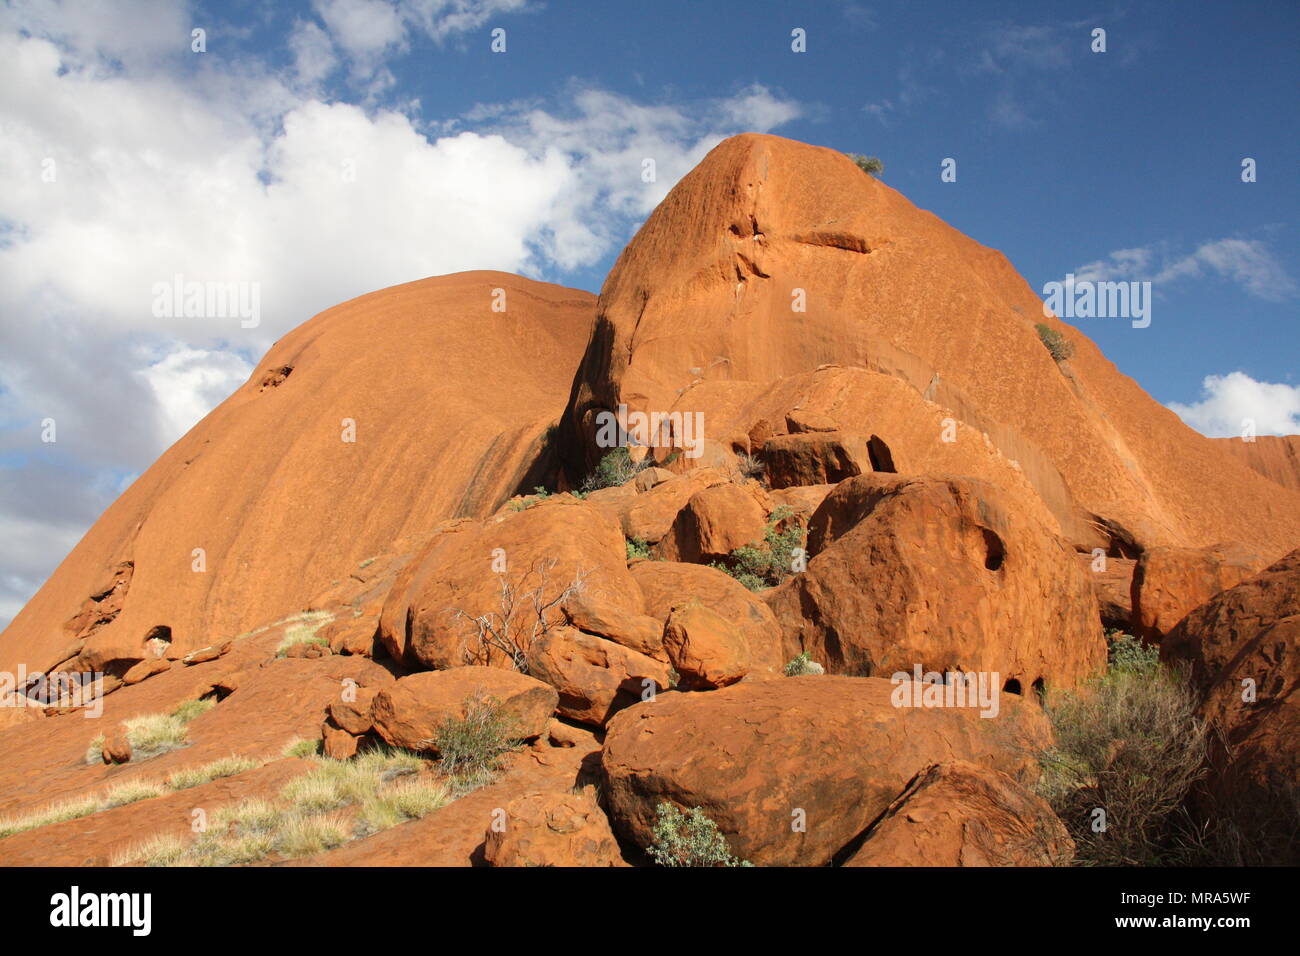 The red sandstone of Uluru glowing in the sunlight. Stock Photo